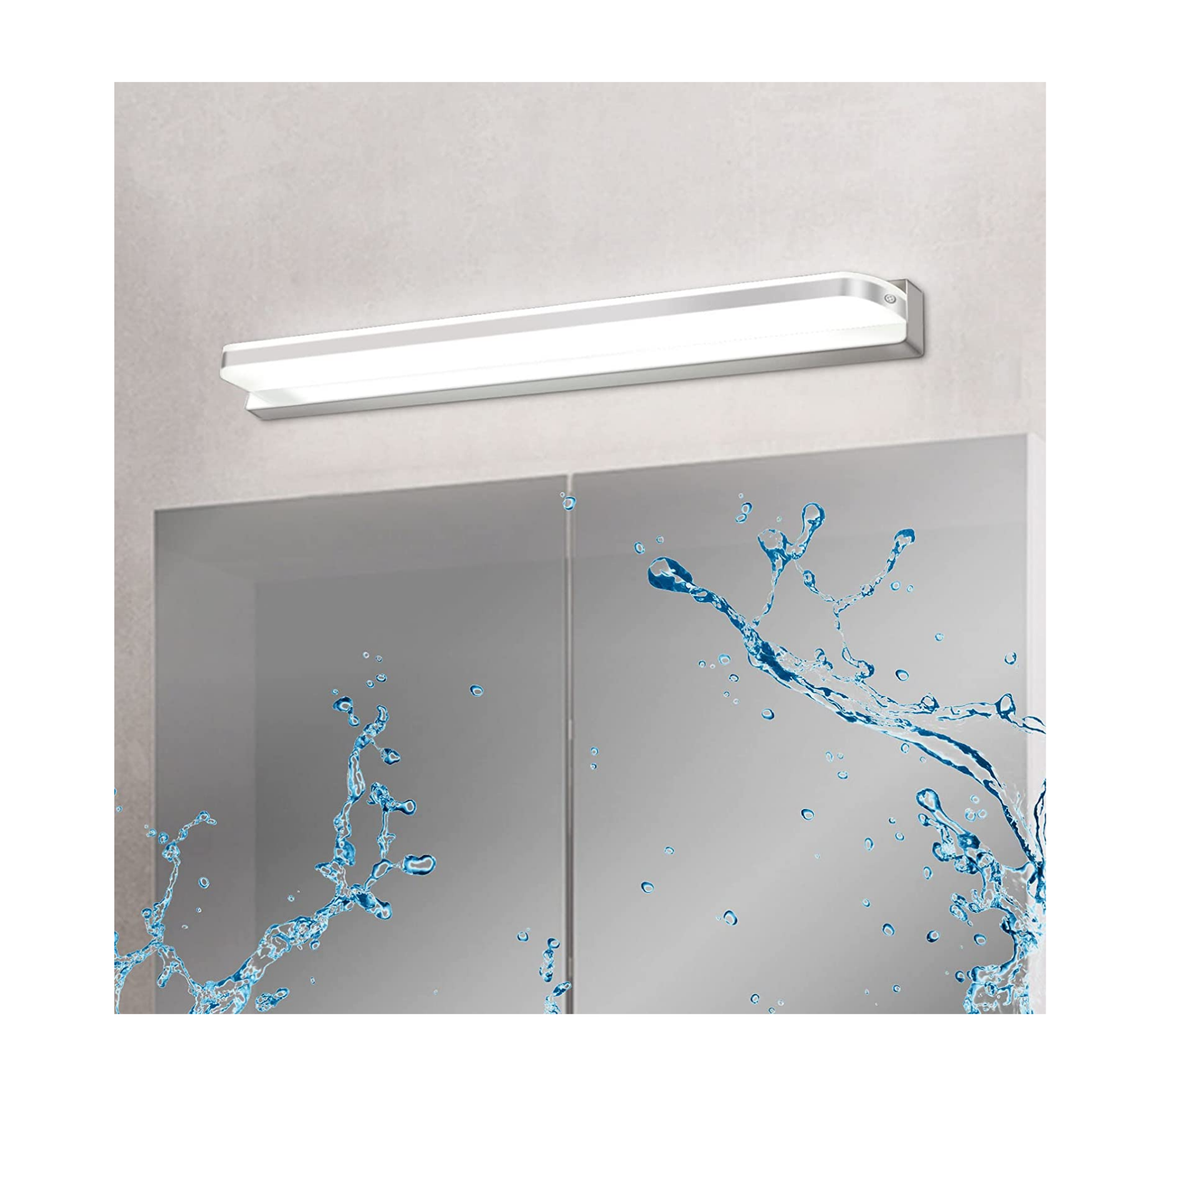 LED Mirror Front Light 9W Daylight White, Front Lighting IP44 for Bathroom, LED Over Mirror Light, Stainless Steel Base